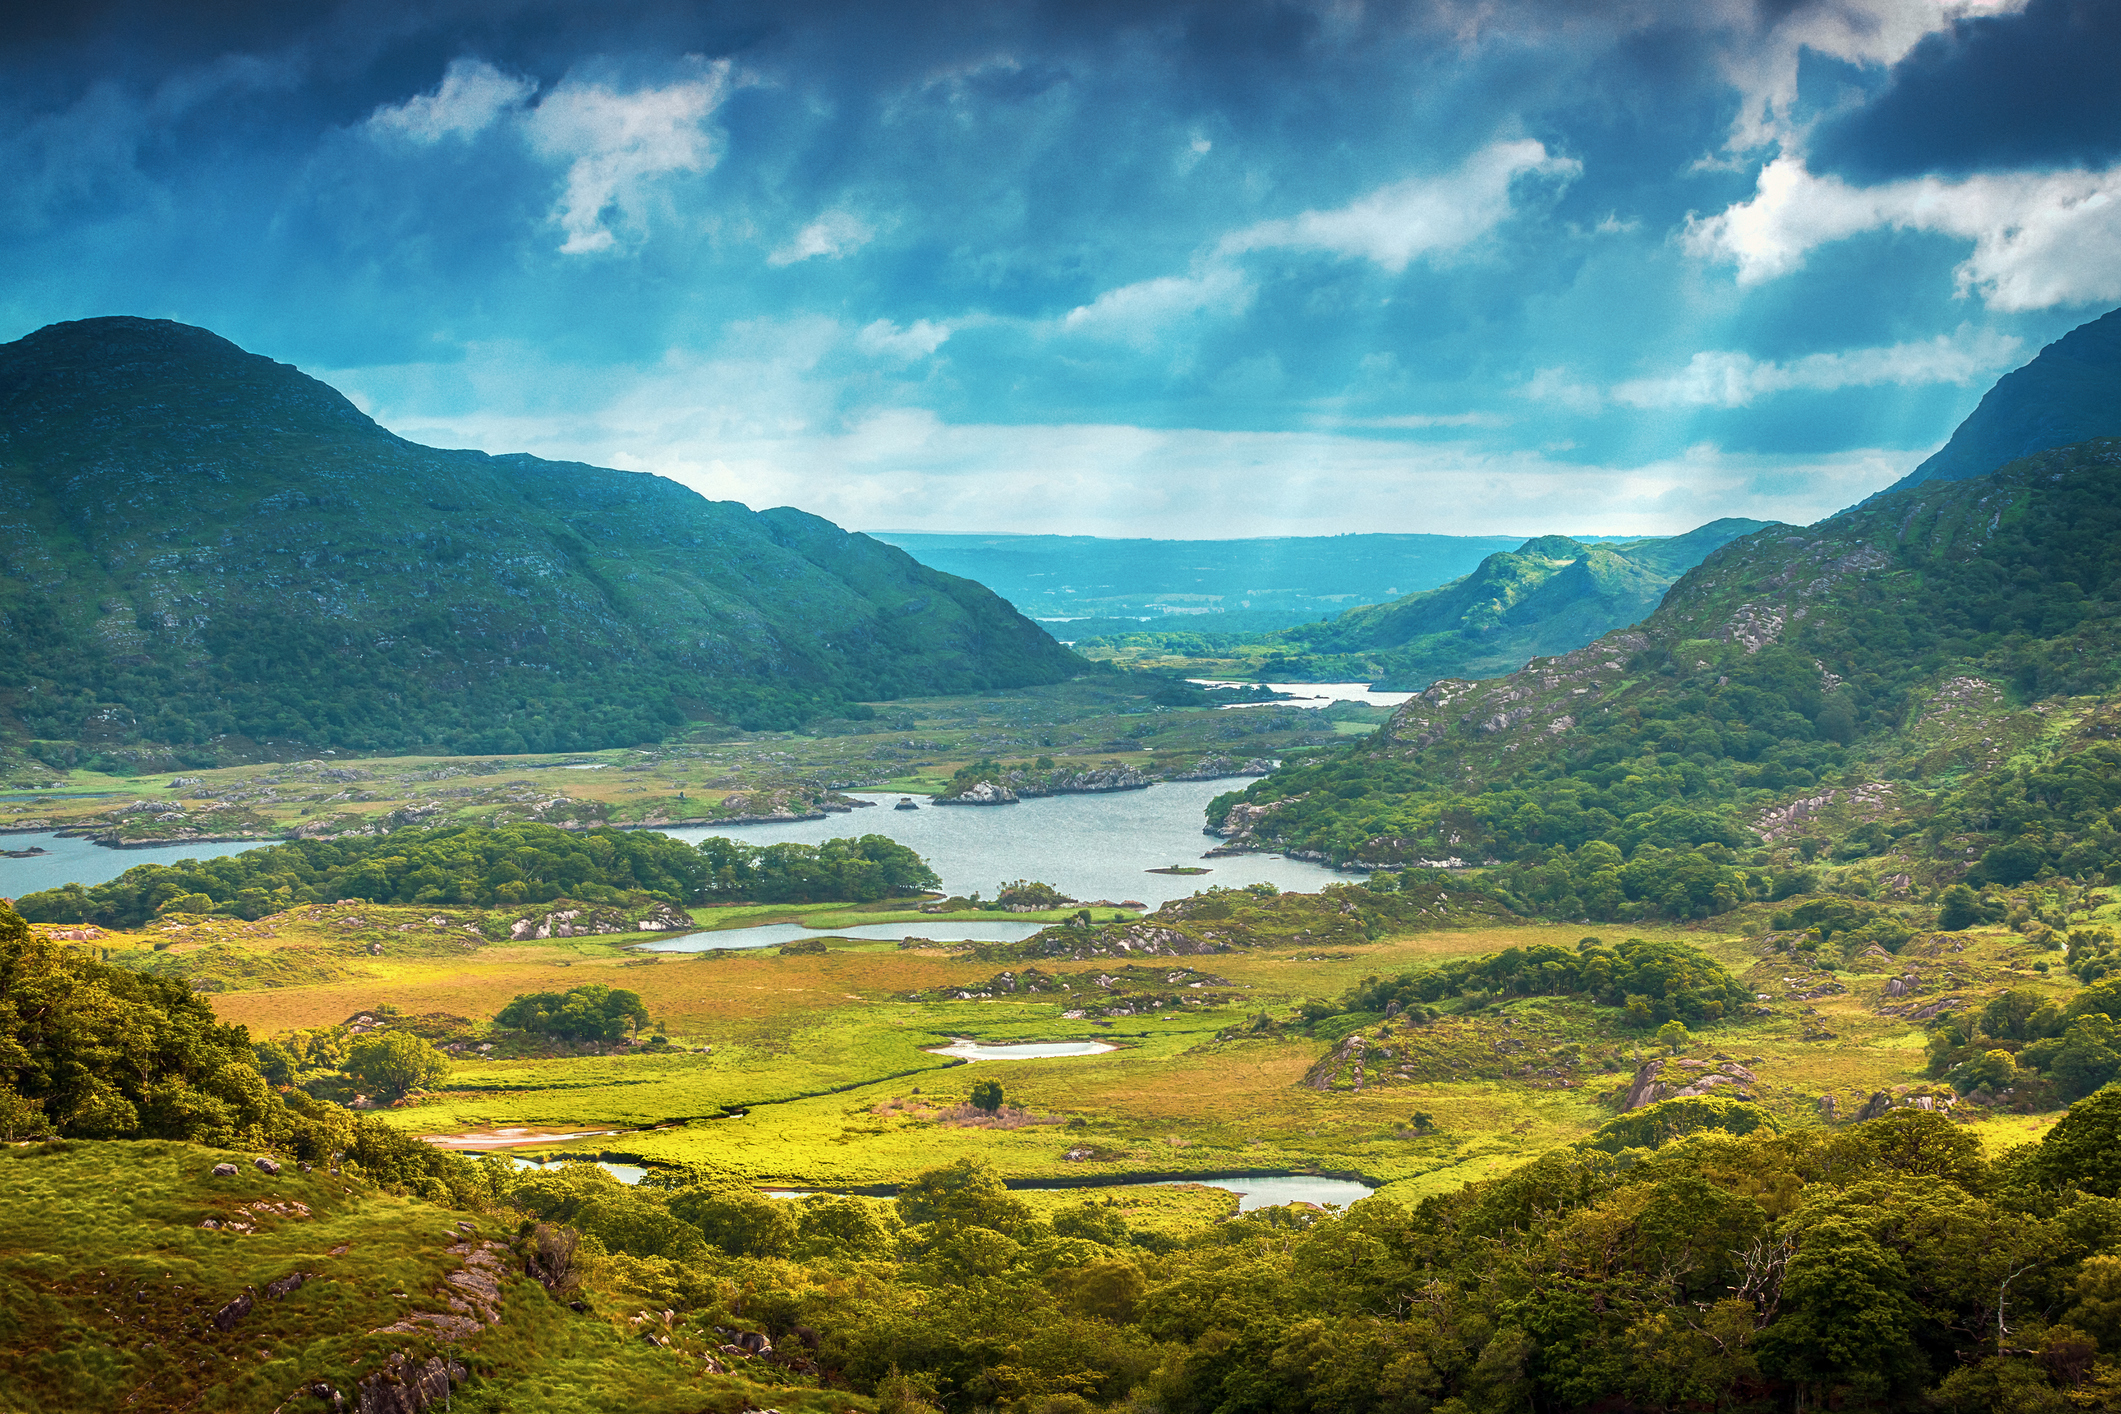 Gorgeous landscape in Ireland